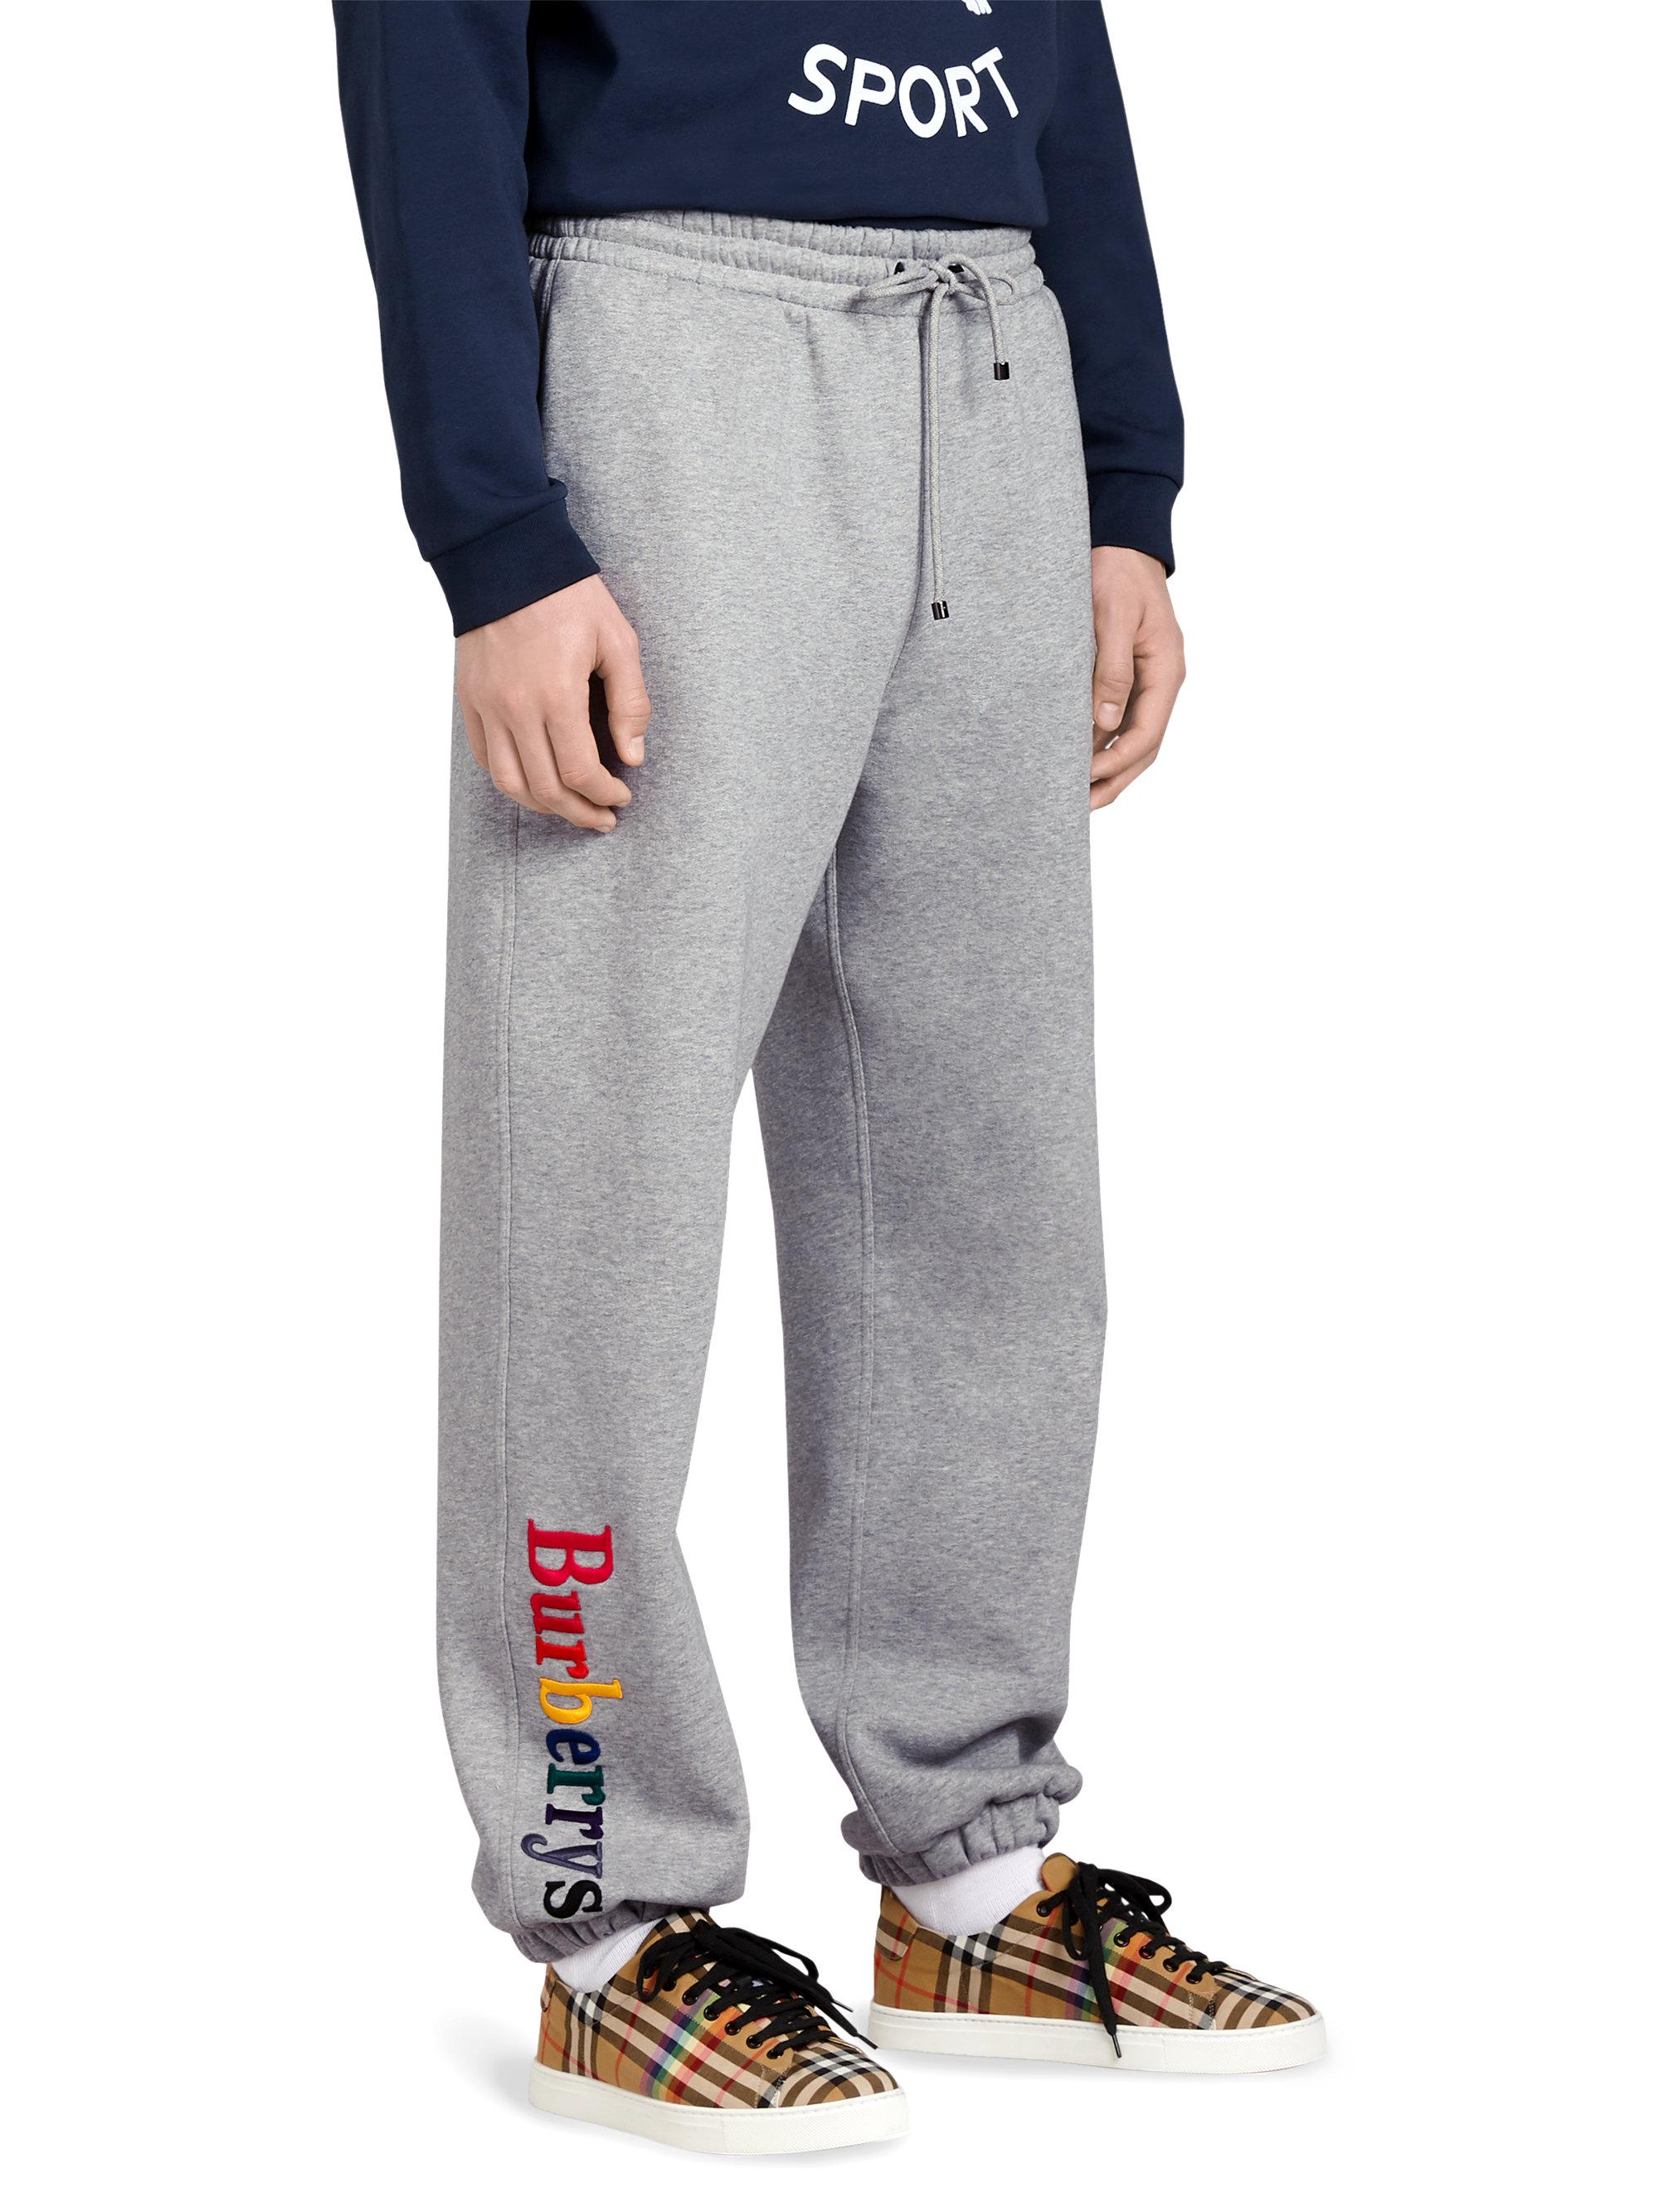 Burberry Cotton Rainbow Logo Sweatpants in Light Grey (Gray) for Men | Lyst